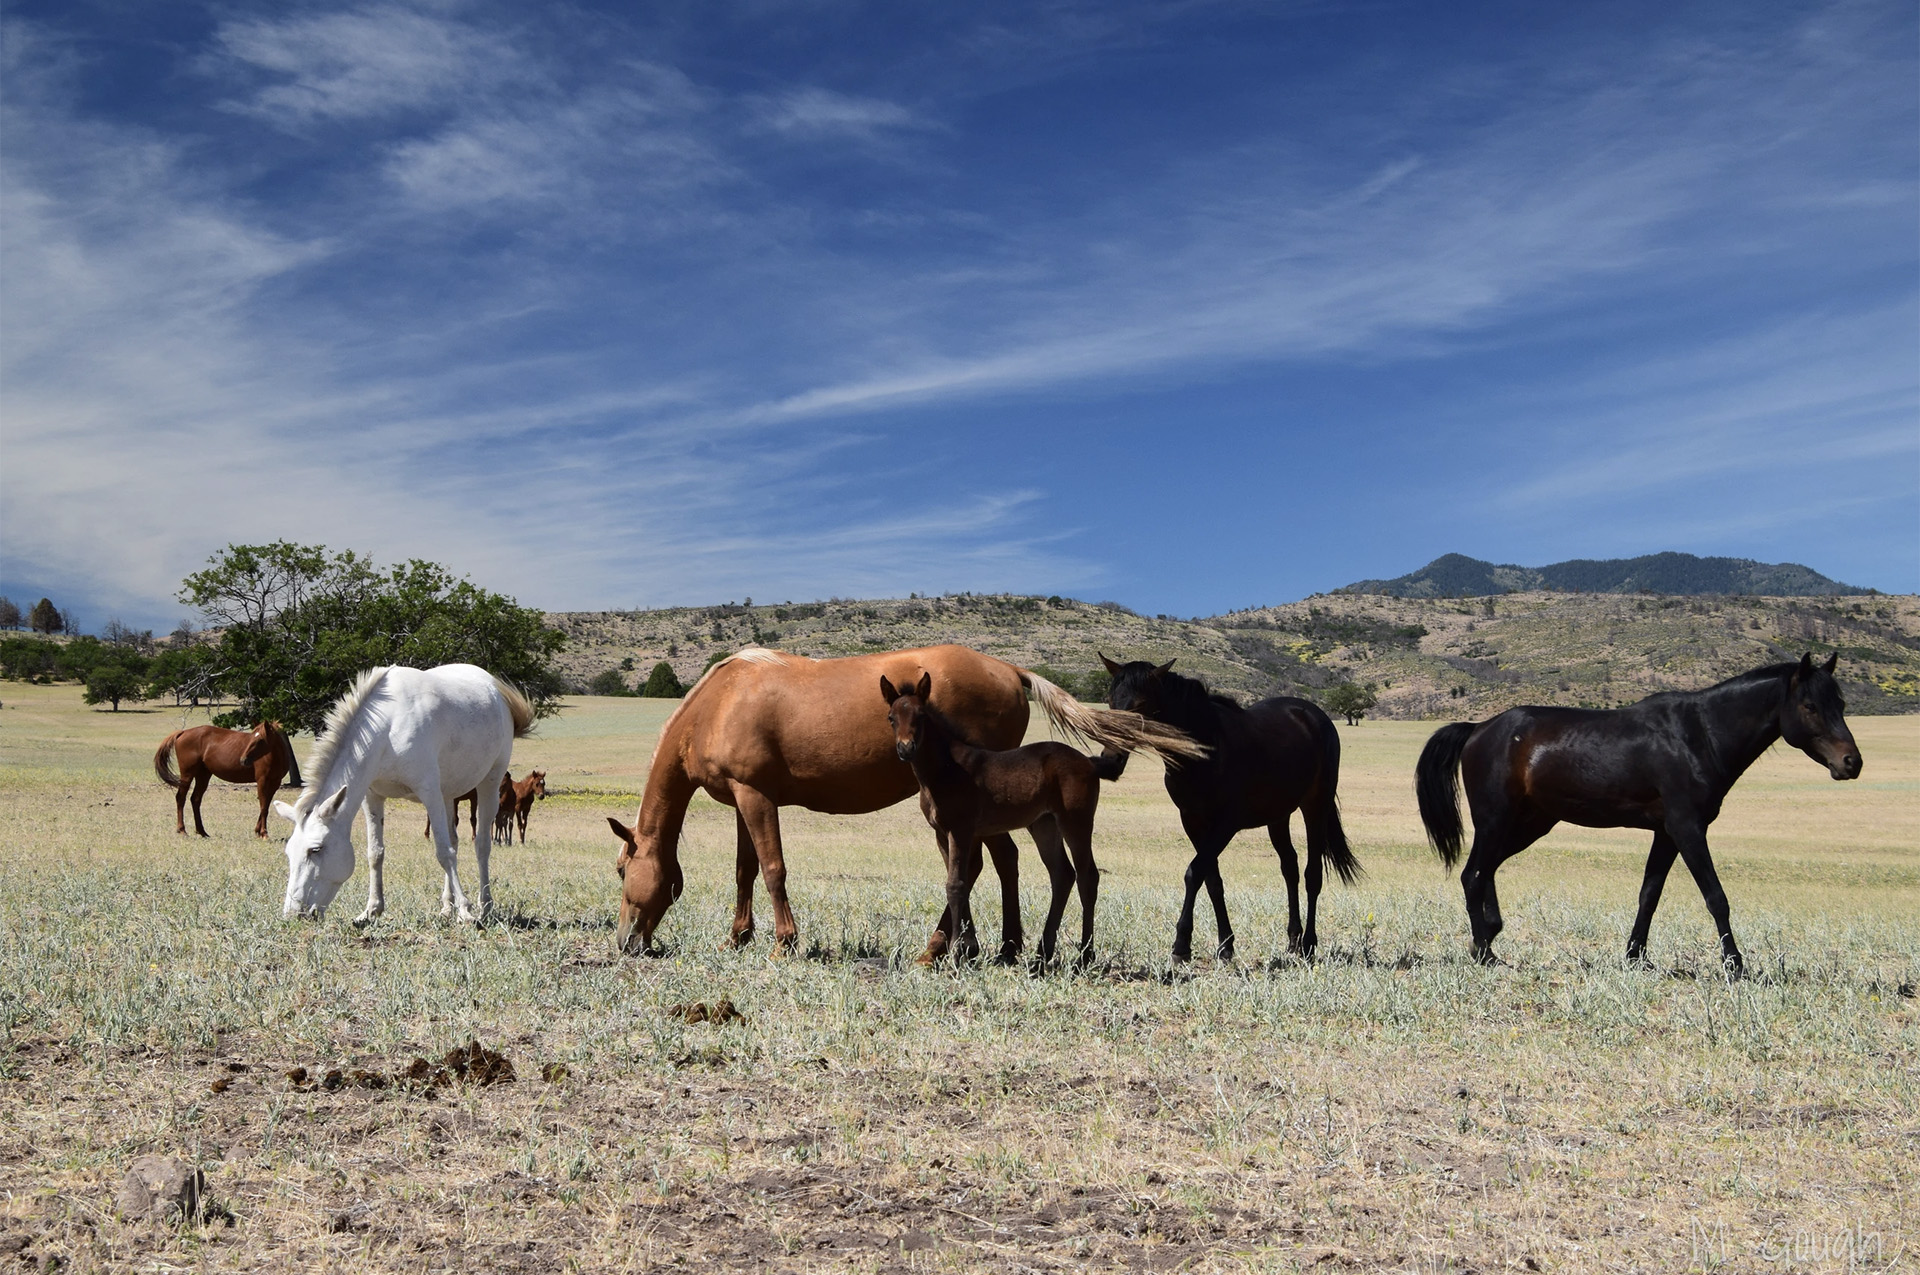 A herd of wild horses grazes in a field in rural California.